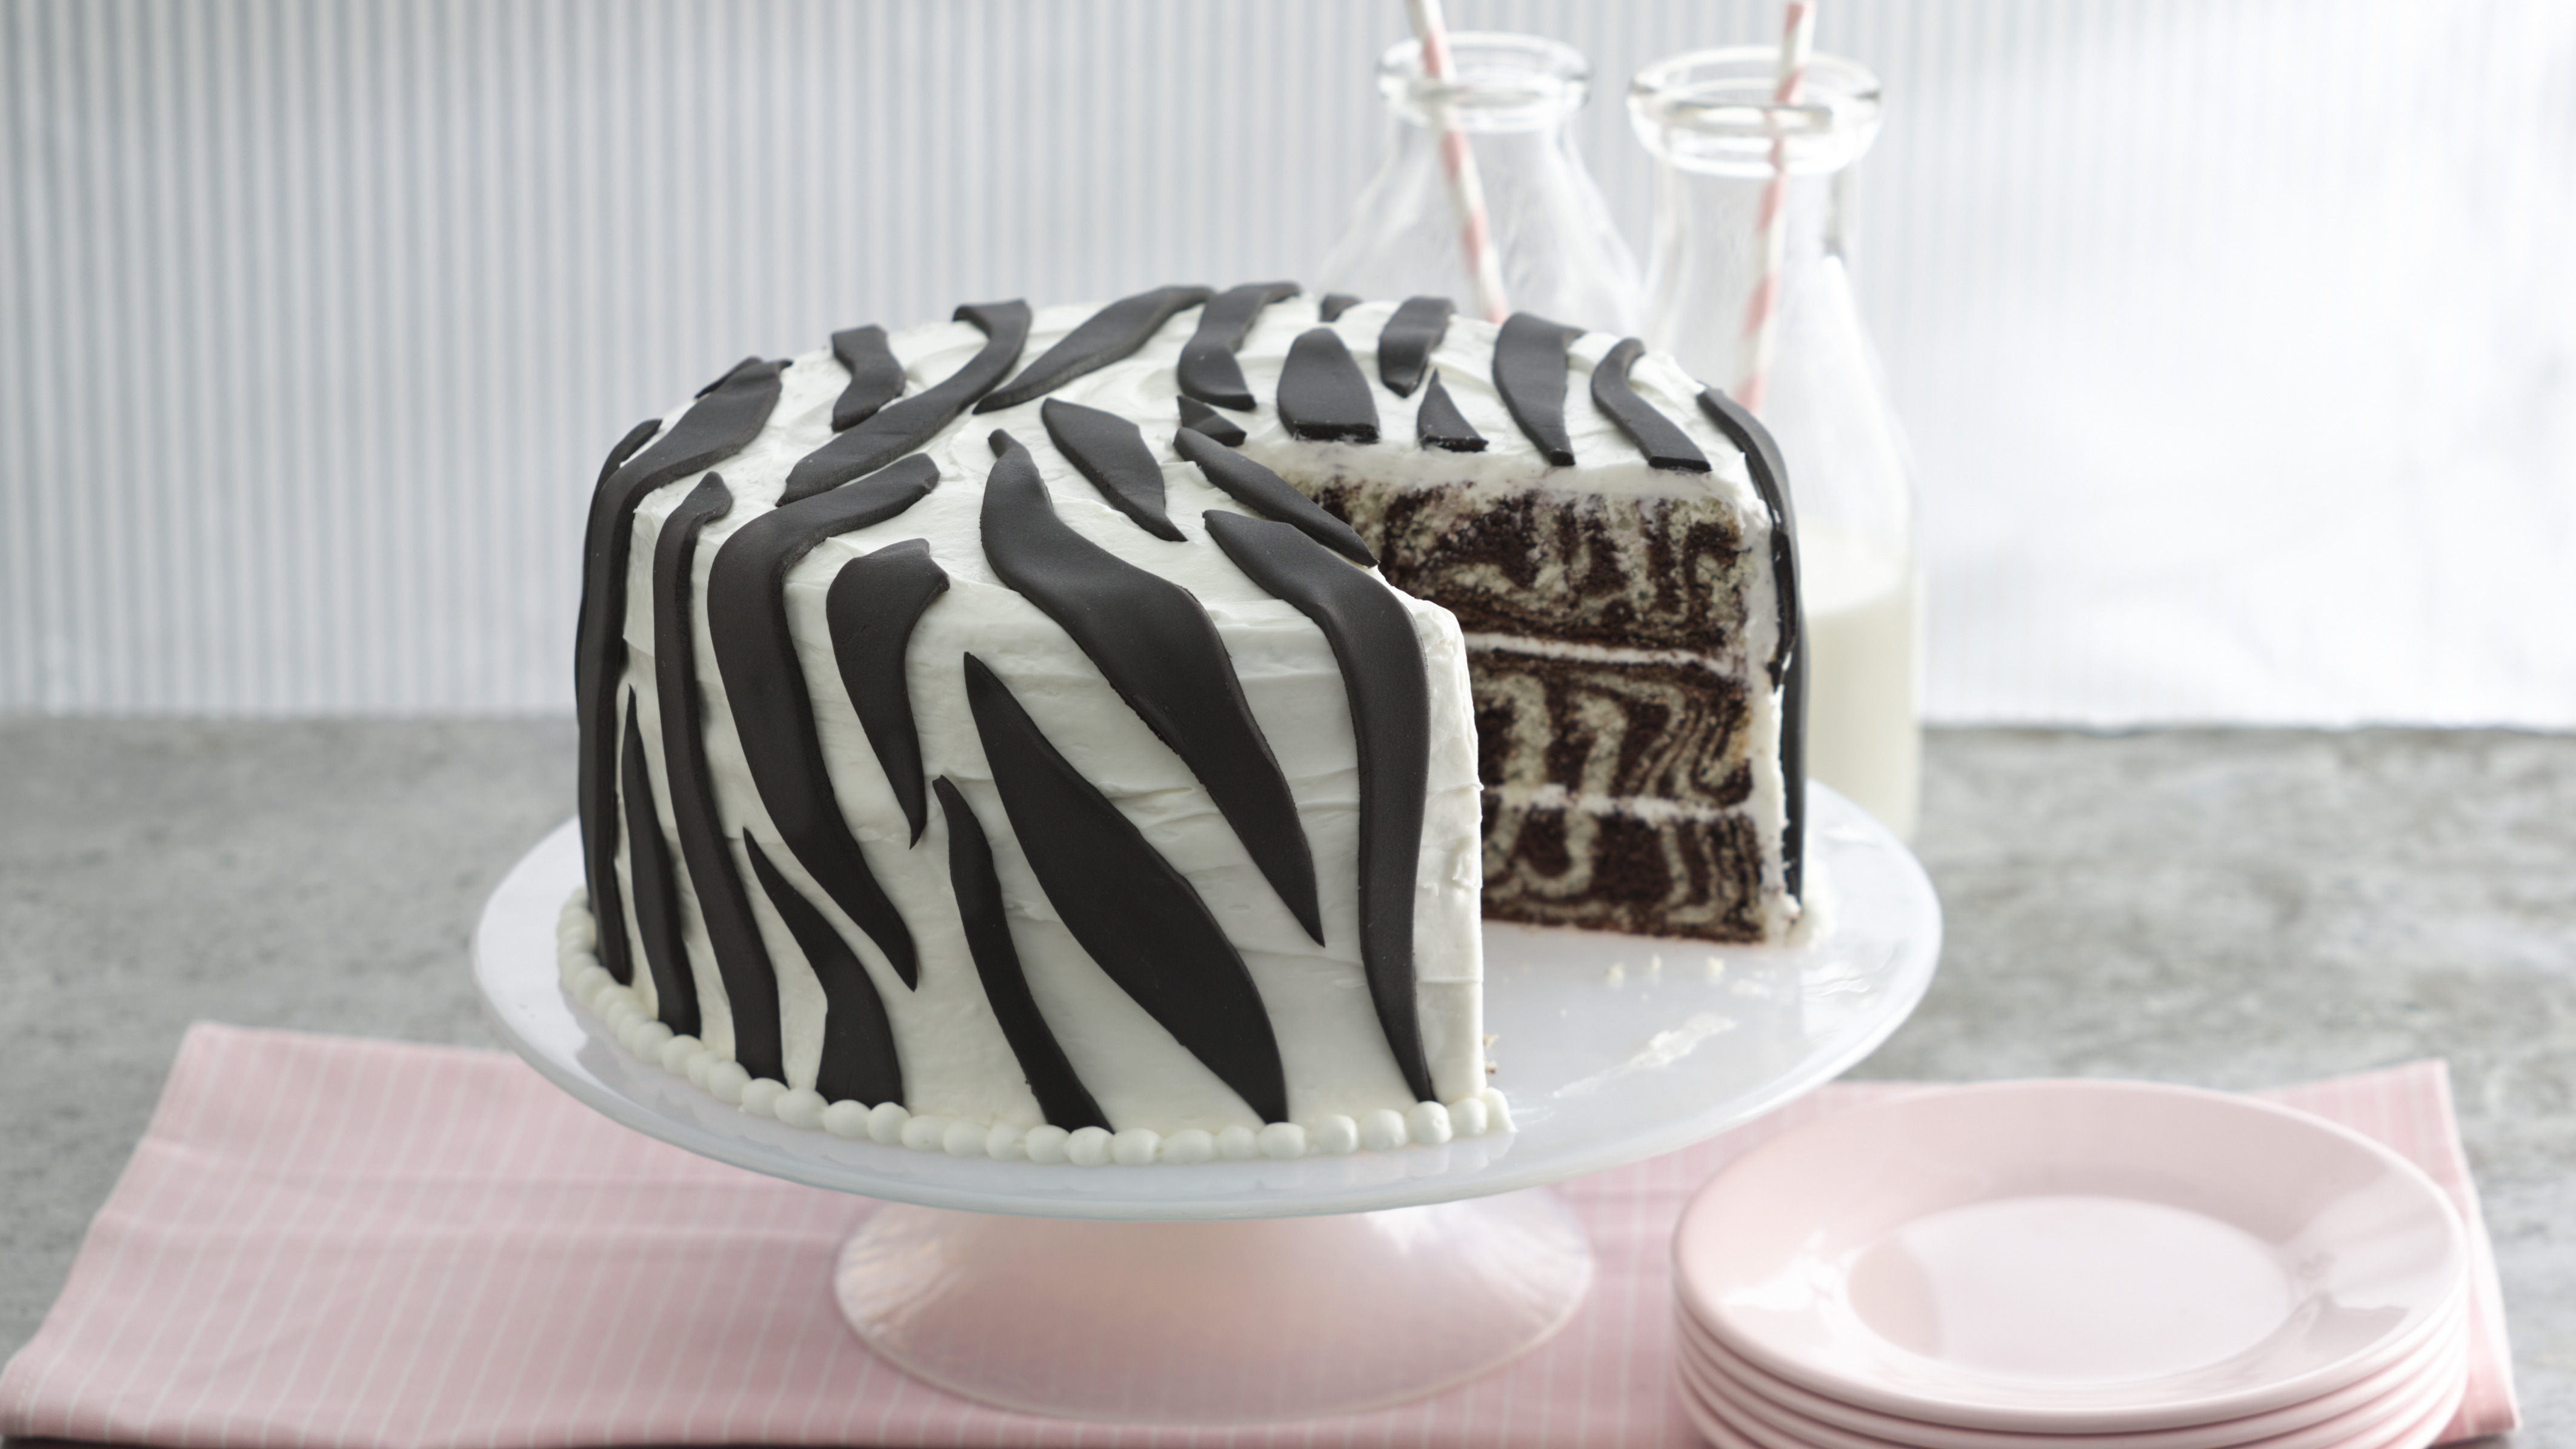 Zebra Cake Recipe | Homemade Little Debbie Zebra Cake